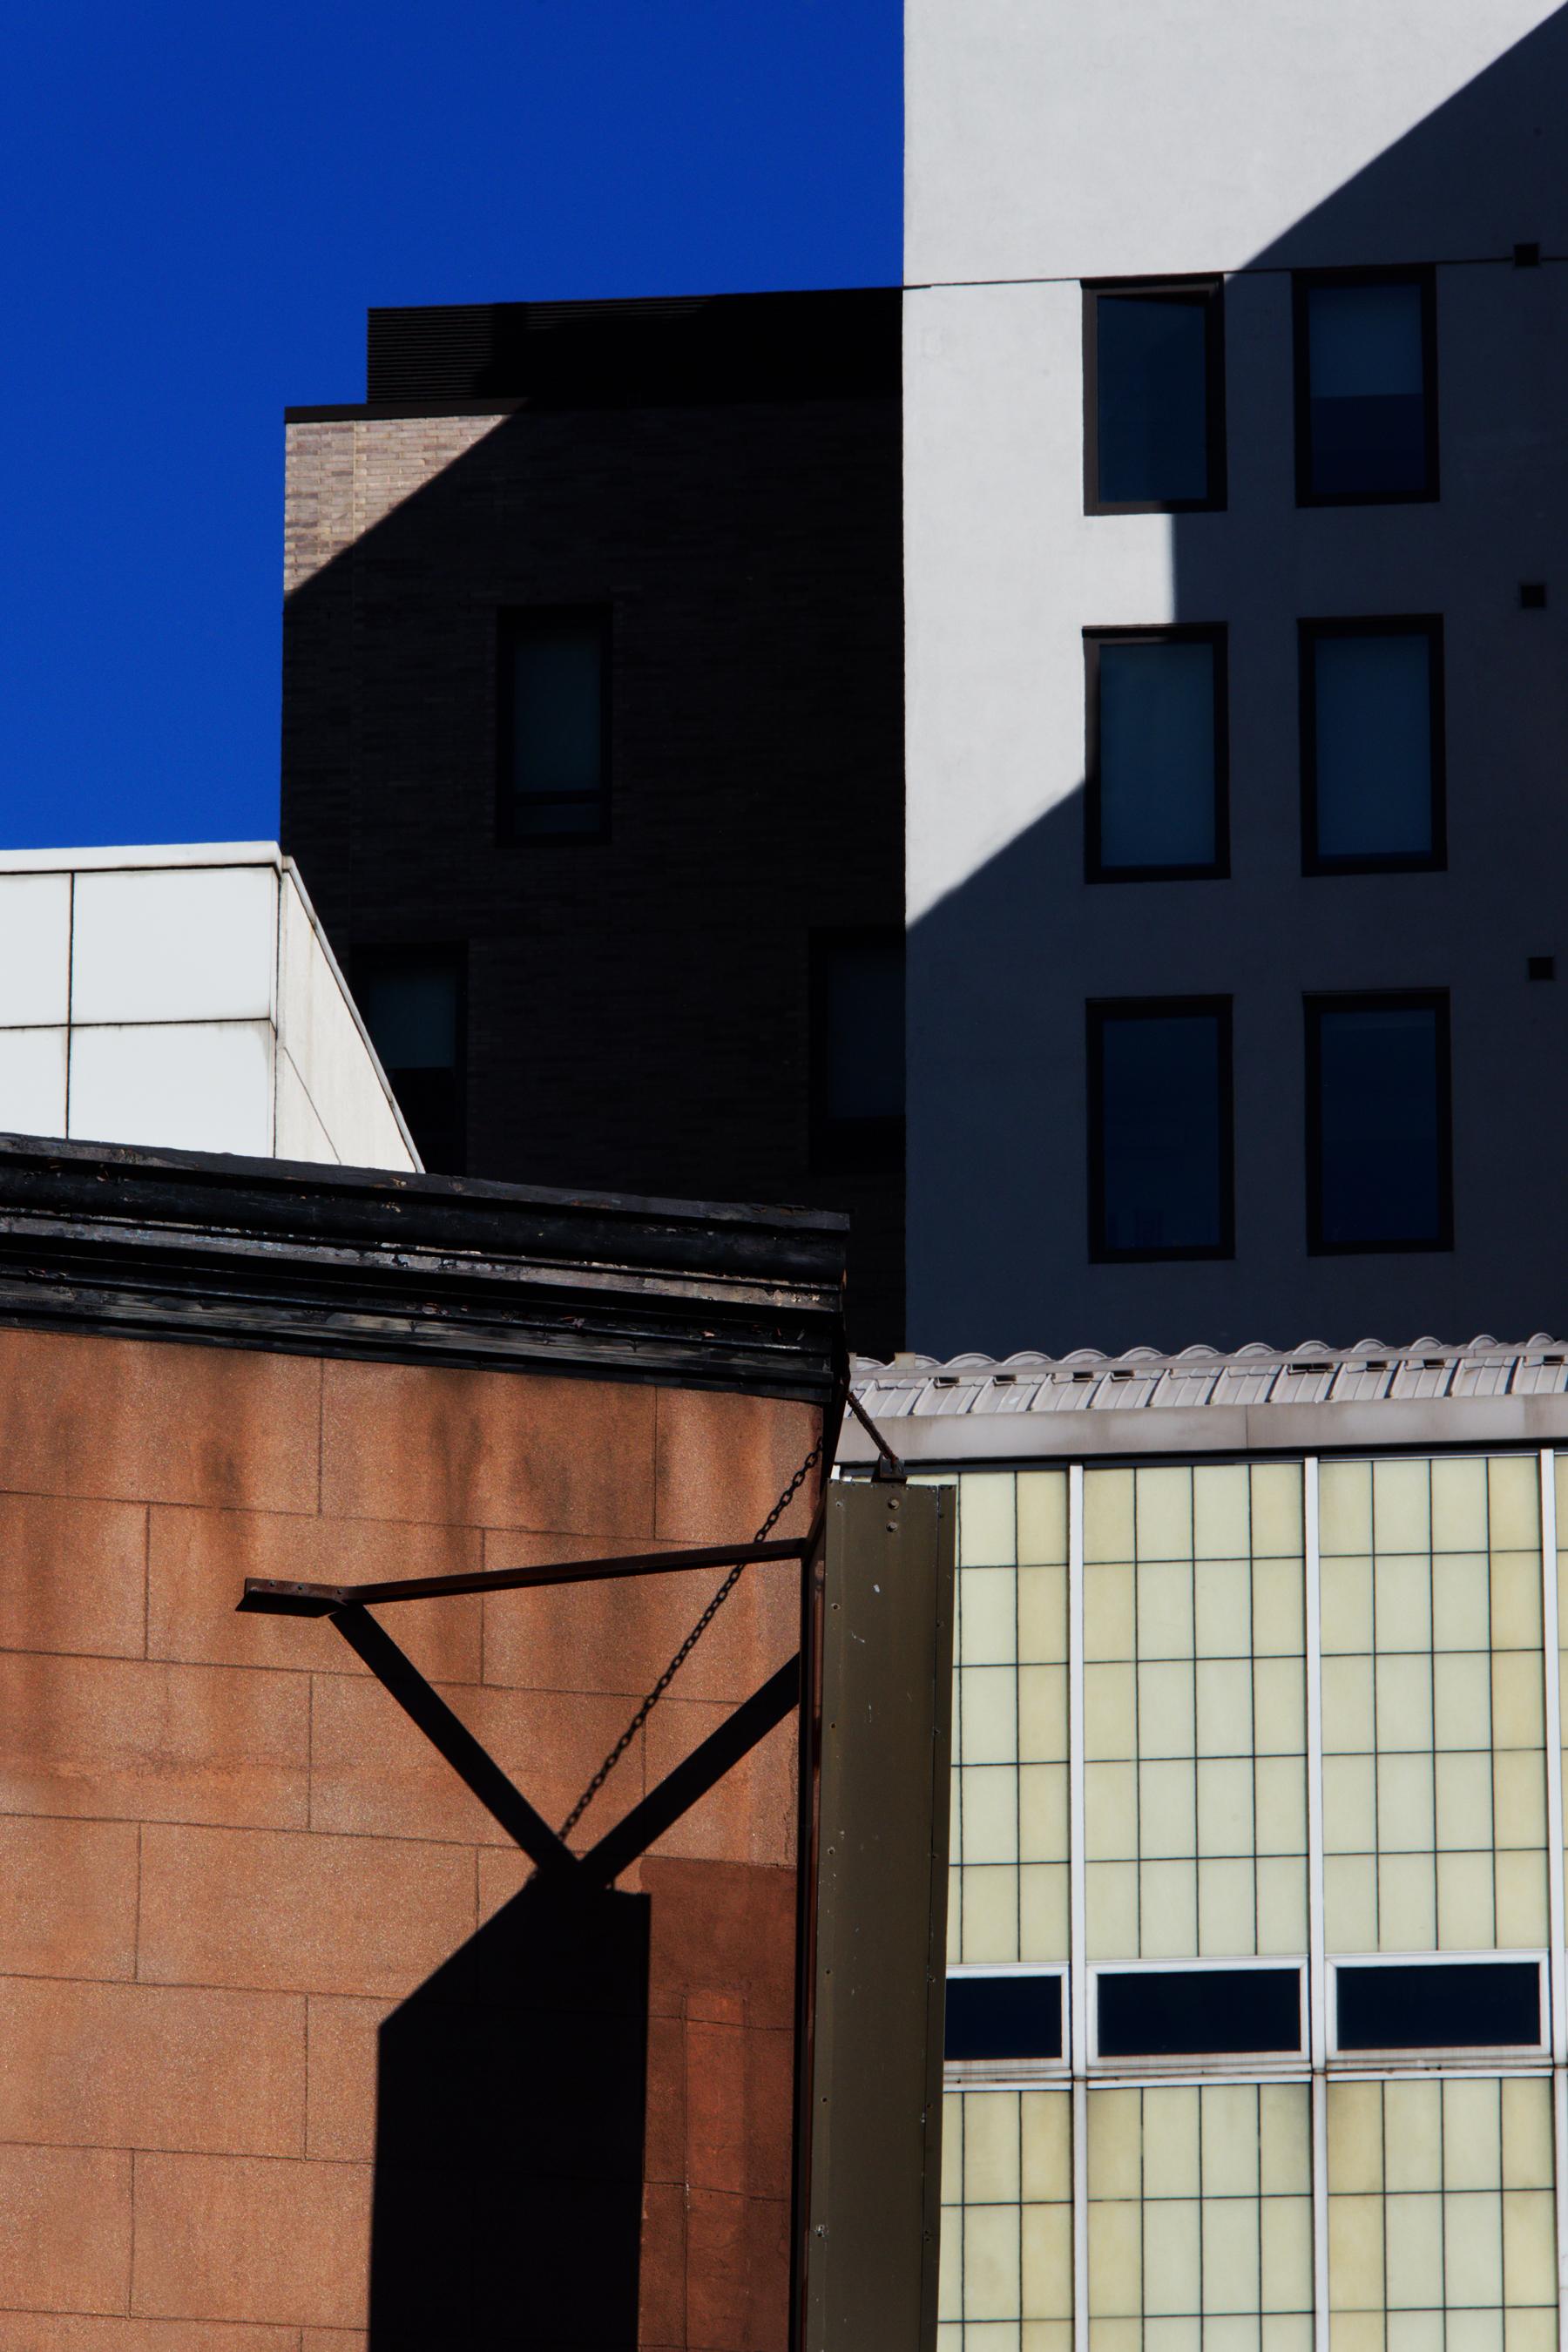 Bob Krasner Color Photograph - "Brooklyn Downtown", photograph, city, architecture, building, geometry, four